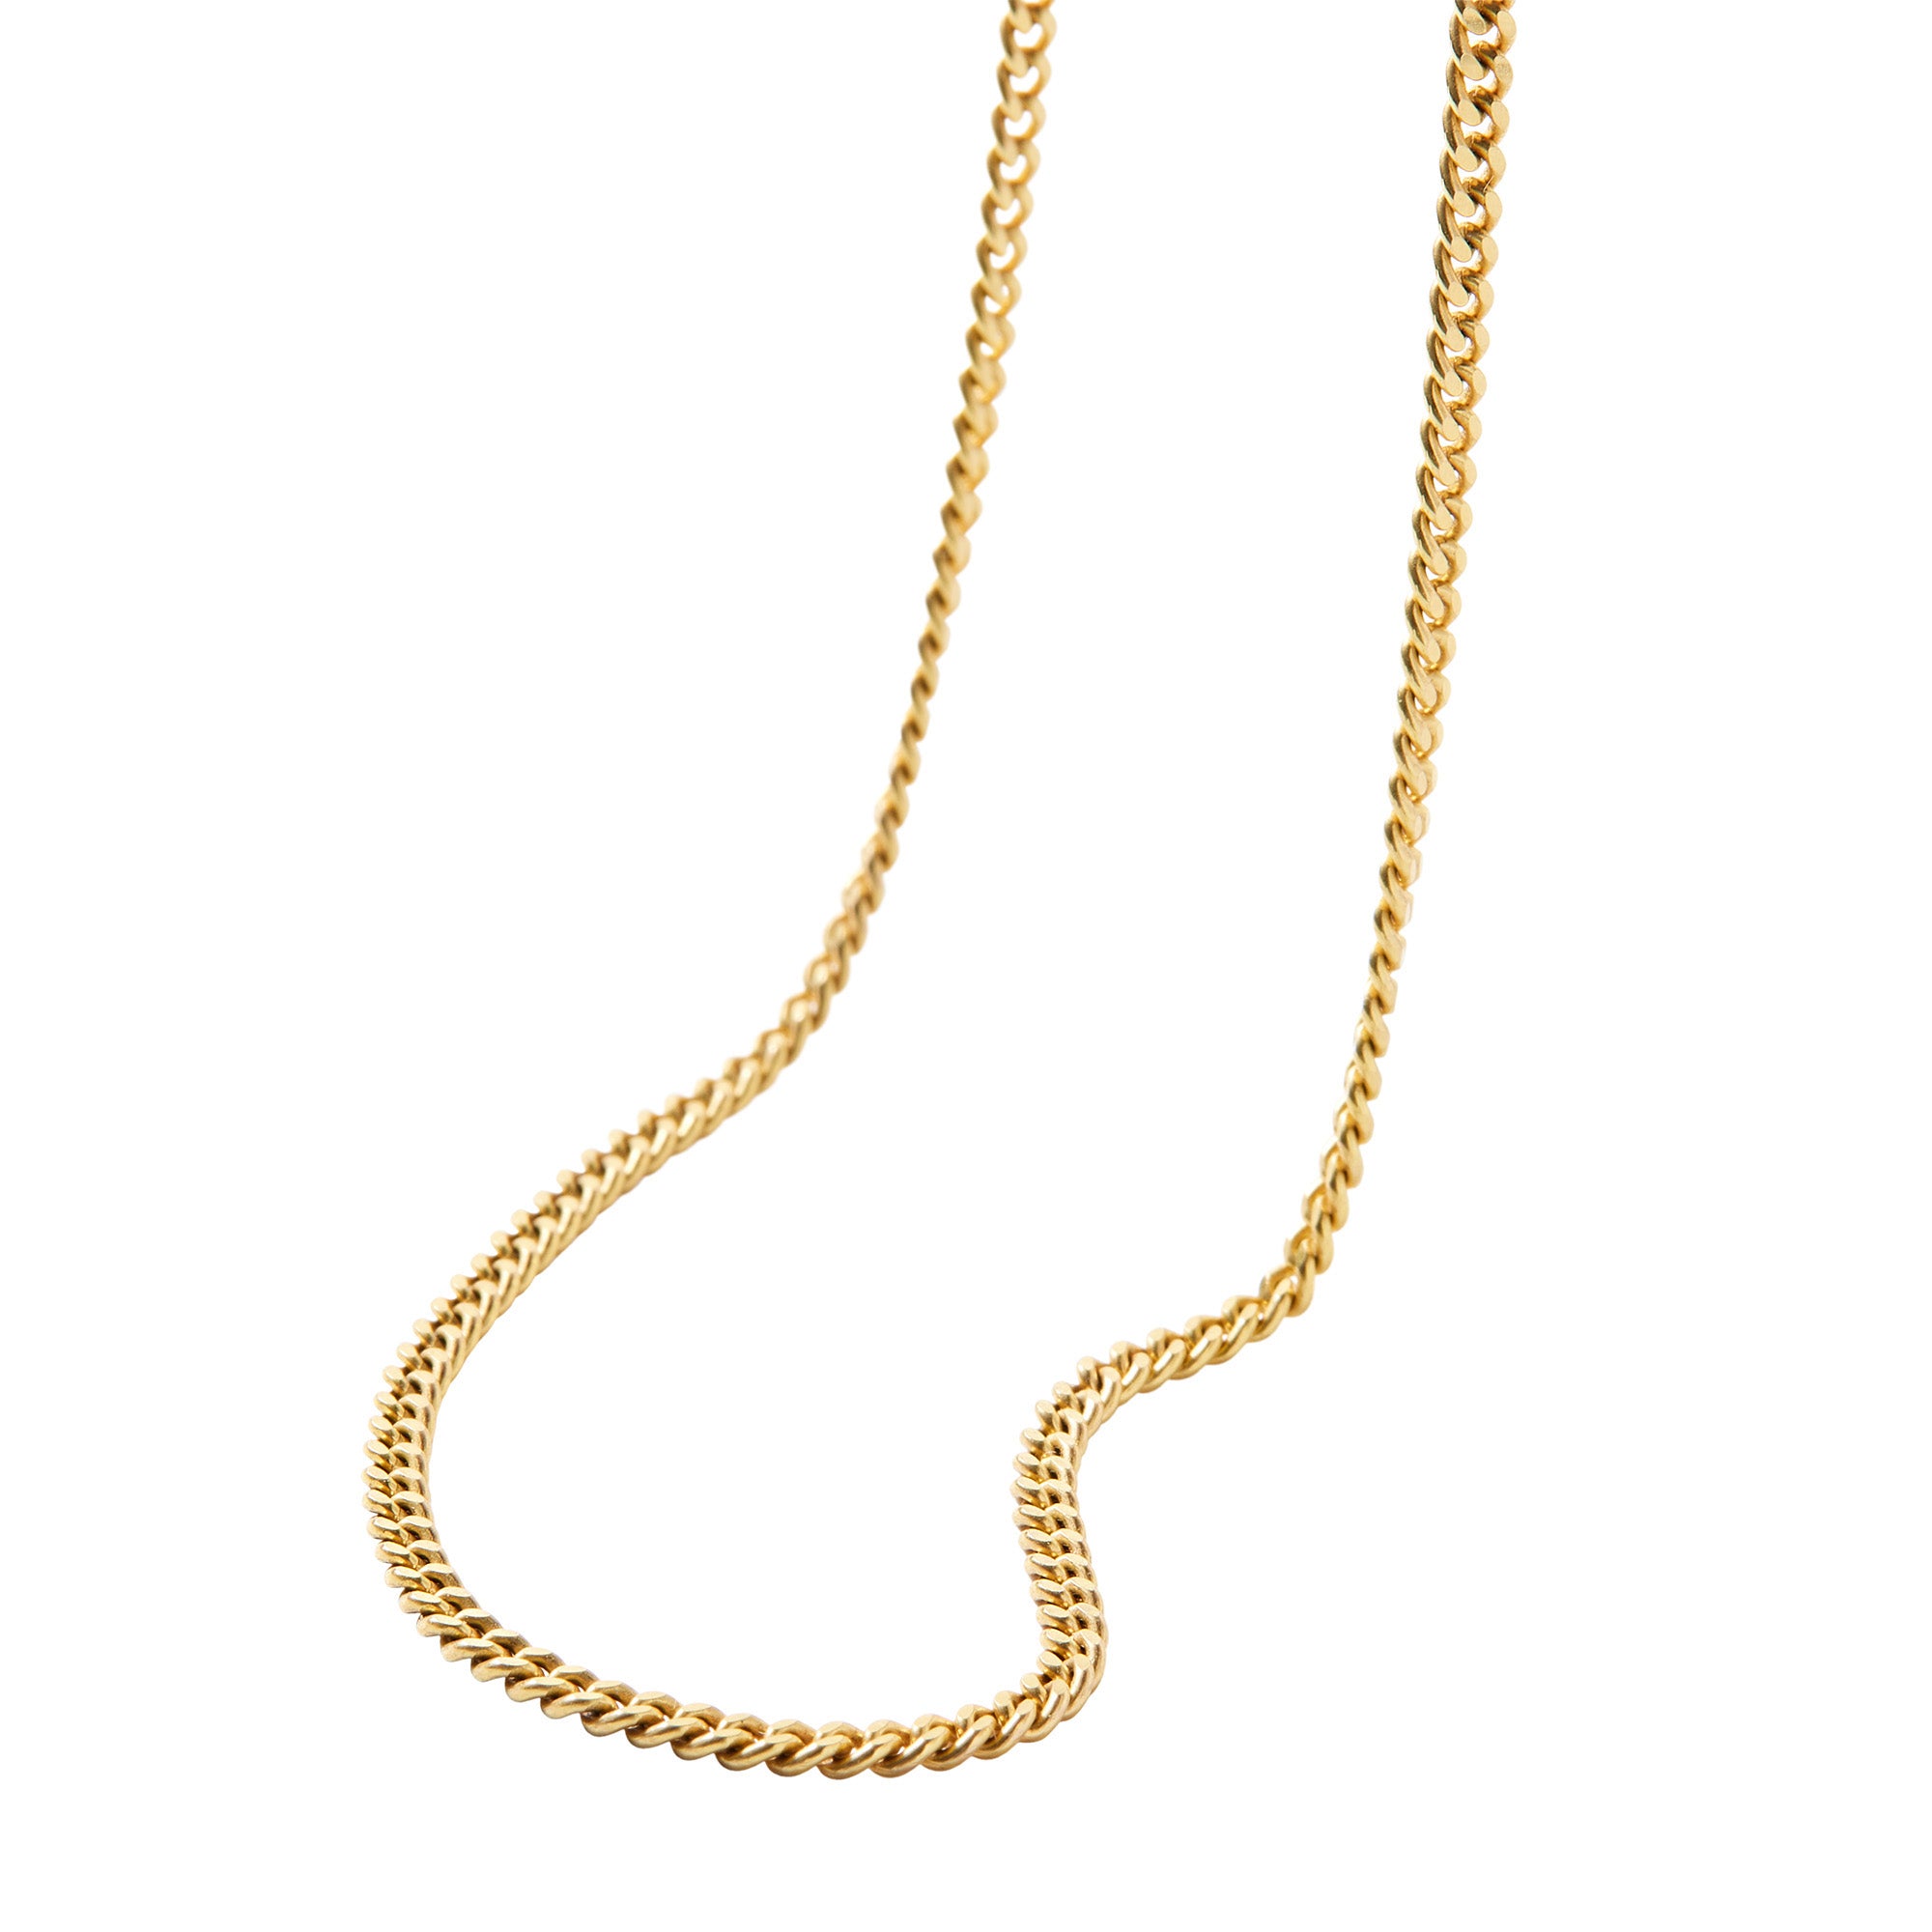 Vintage 8K Gold Curb Chain Necklace